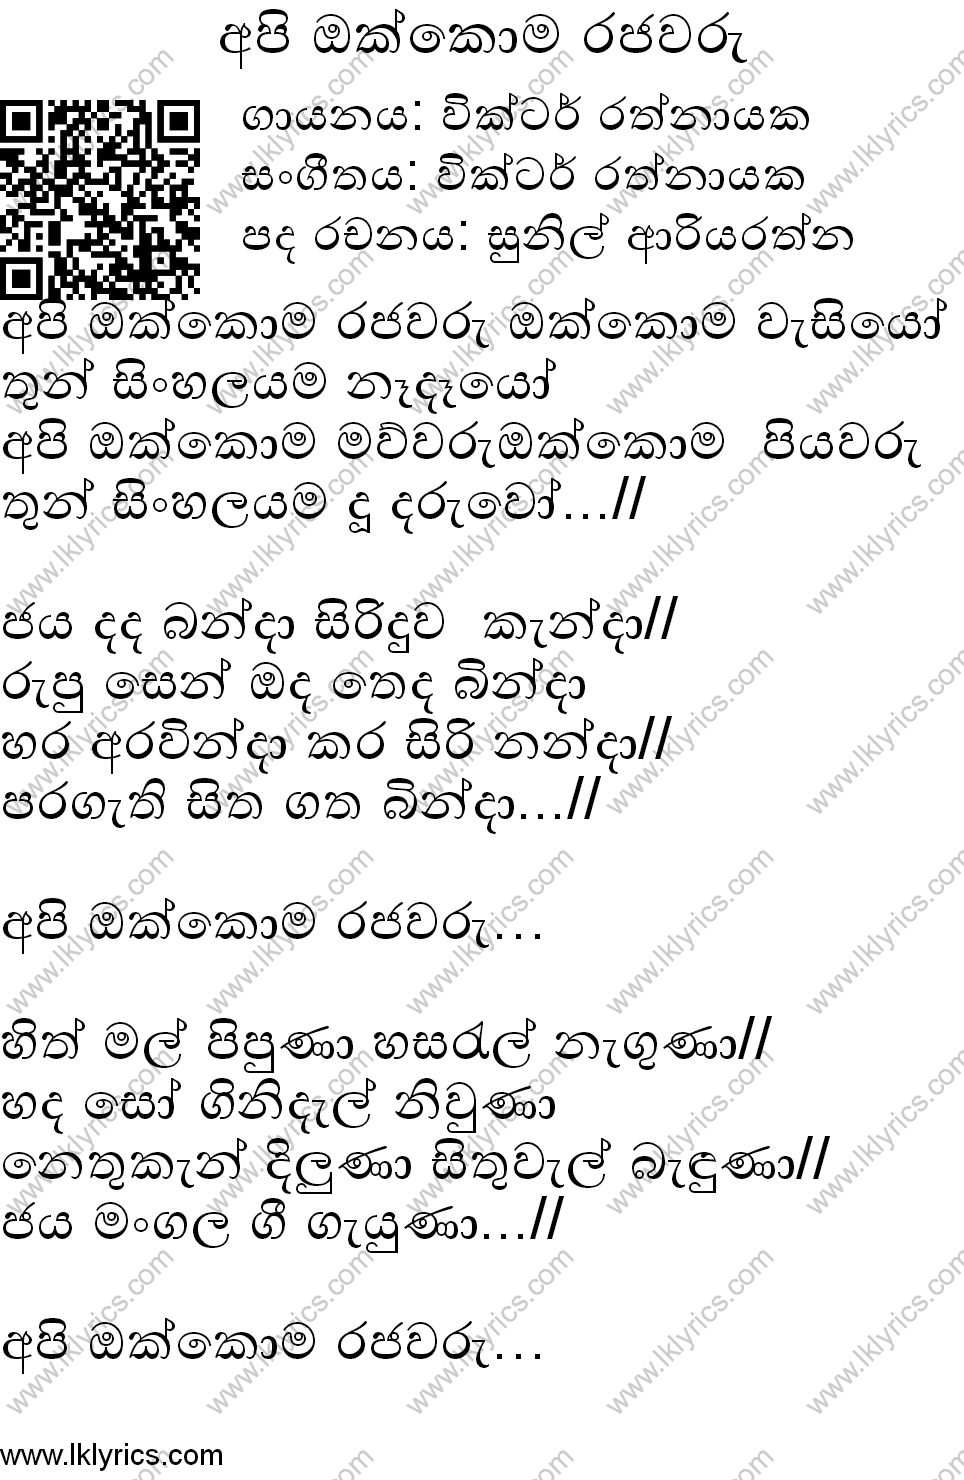 Api Okkoma Rajawaru Lyrics